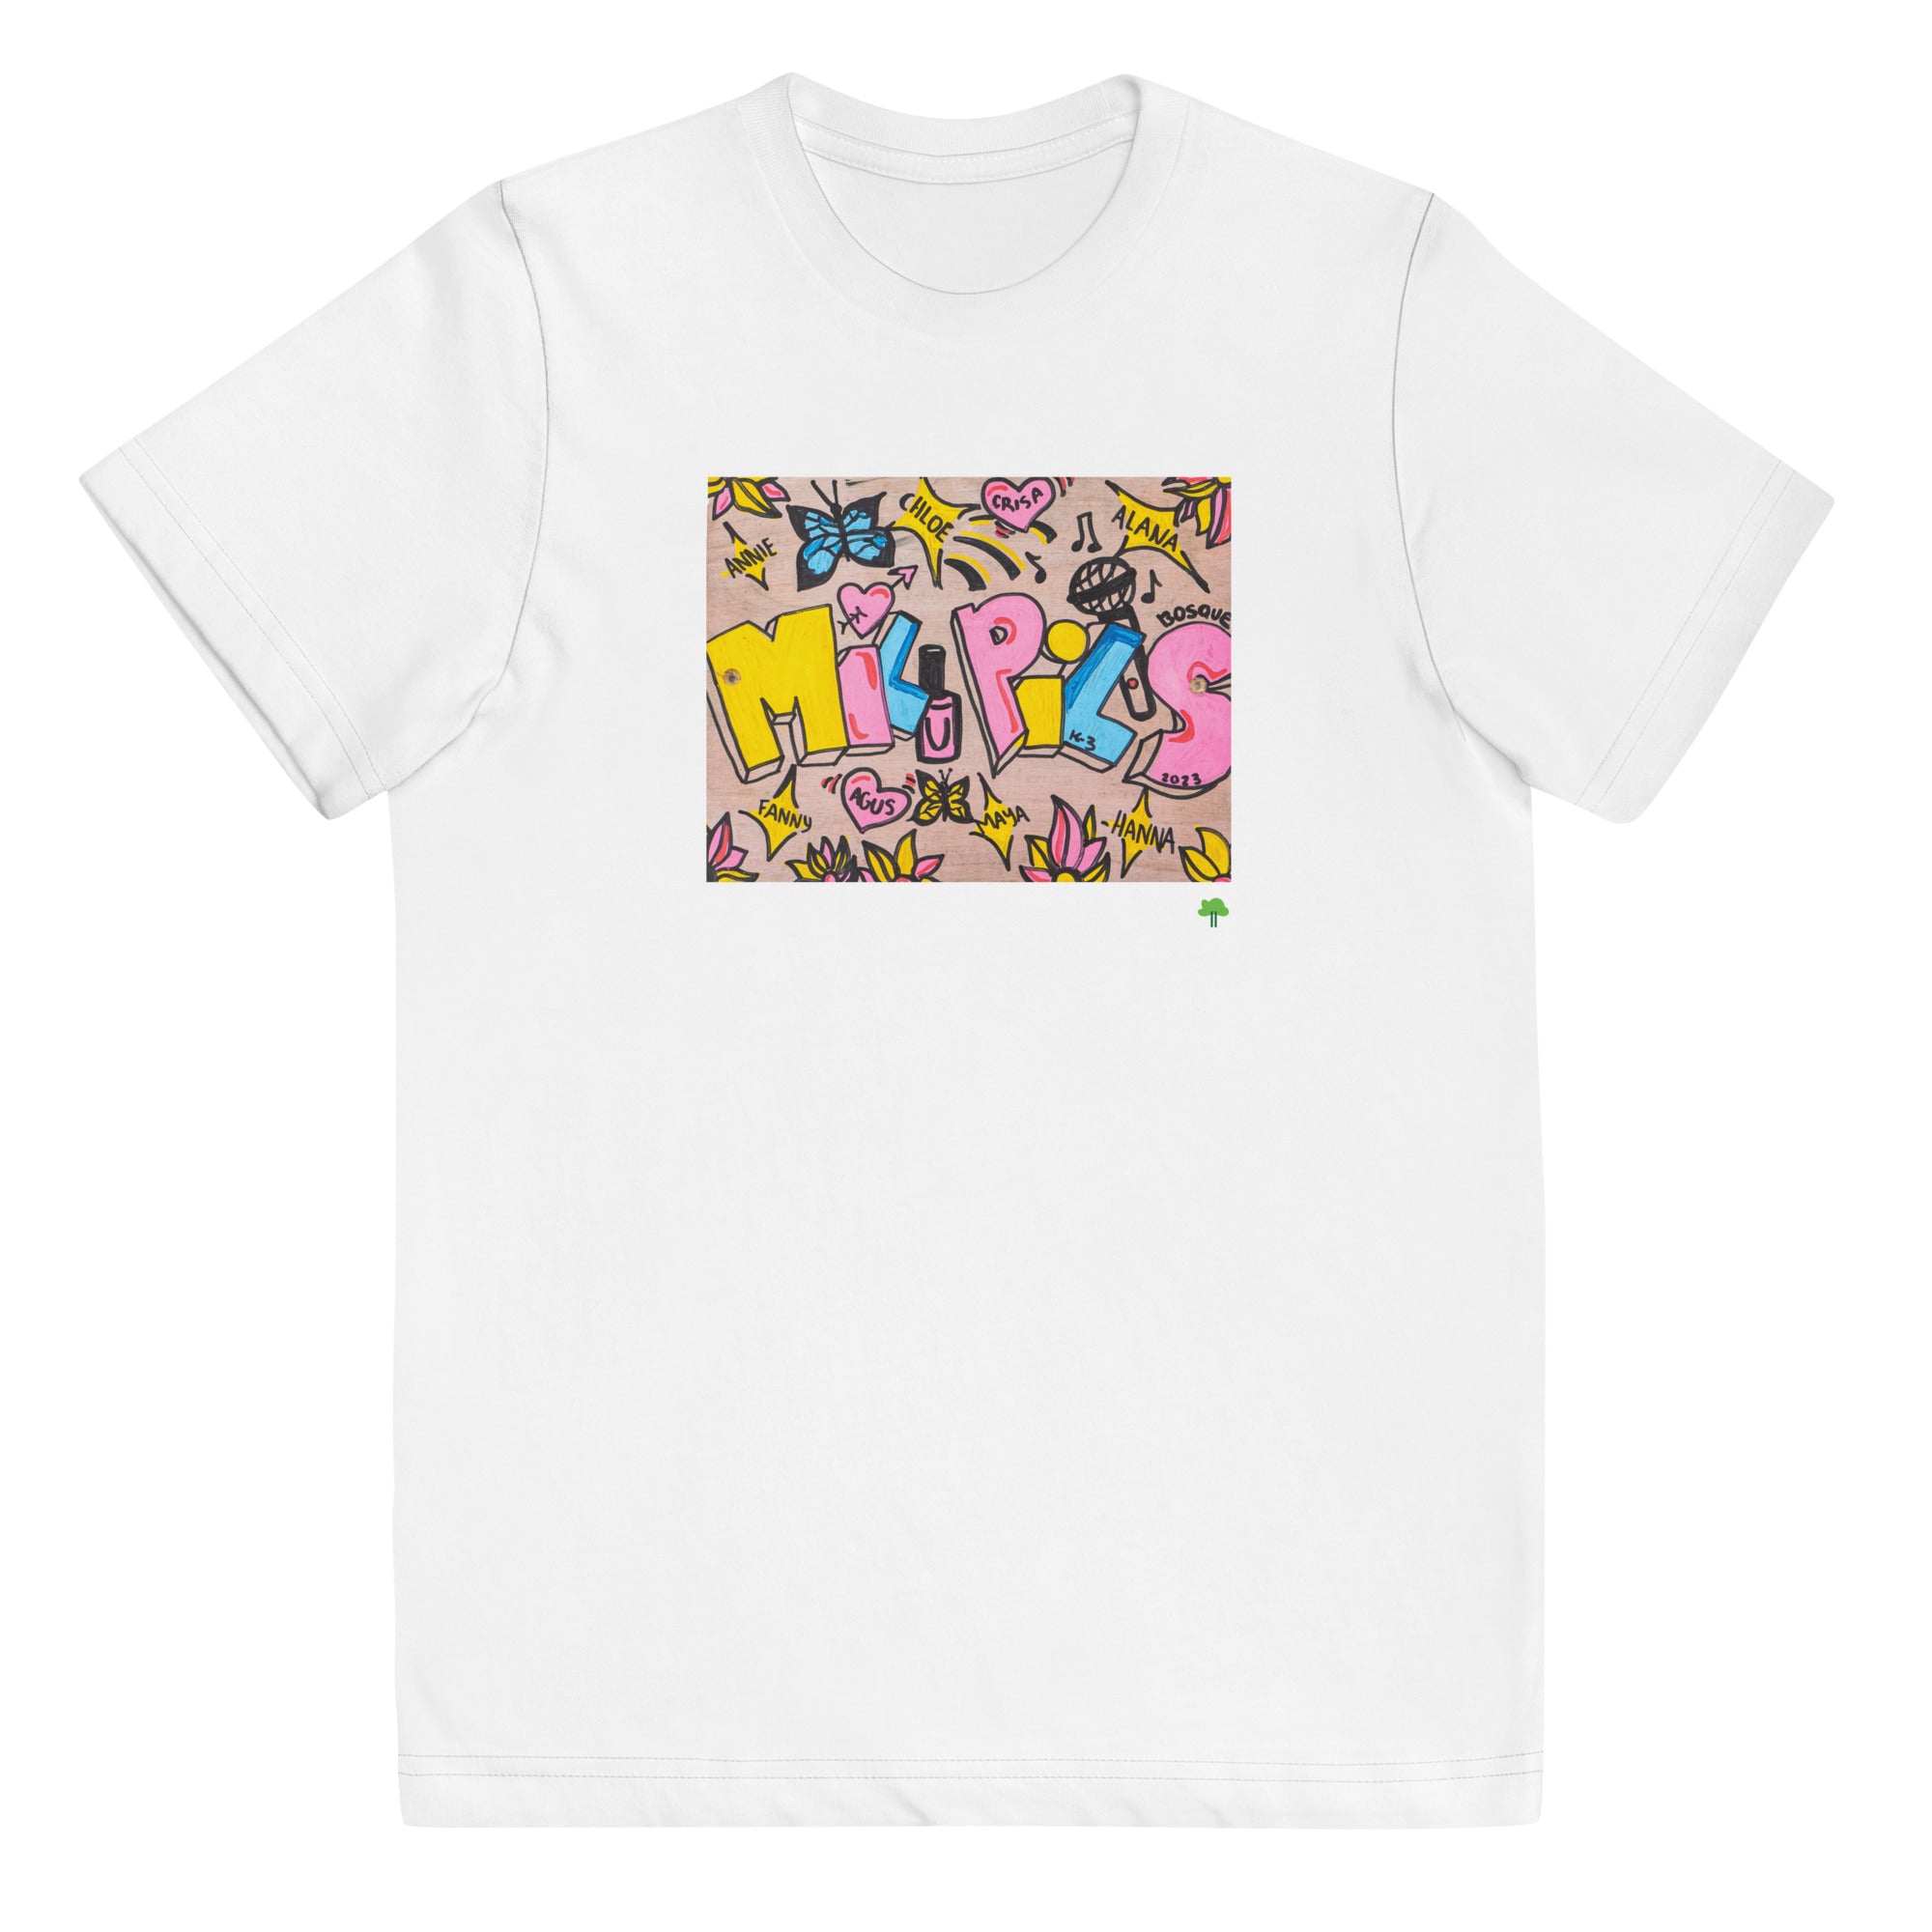 I Temp - Bosque - K3 | Youth jersey t-shirt